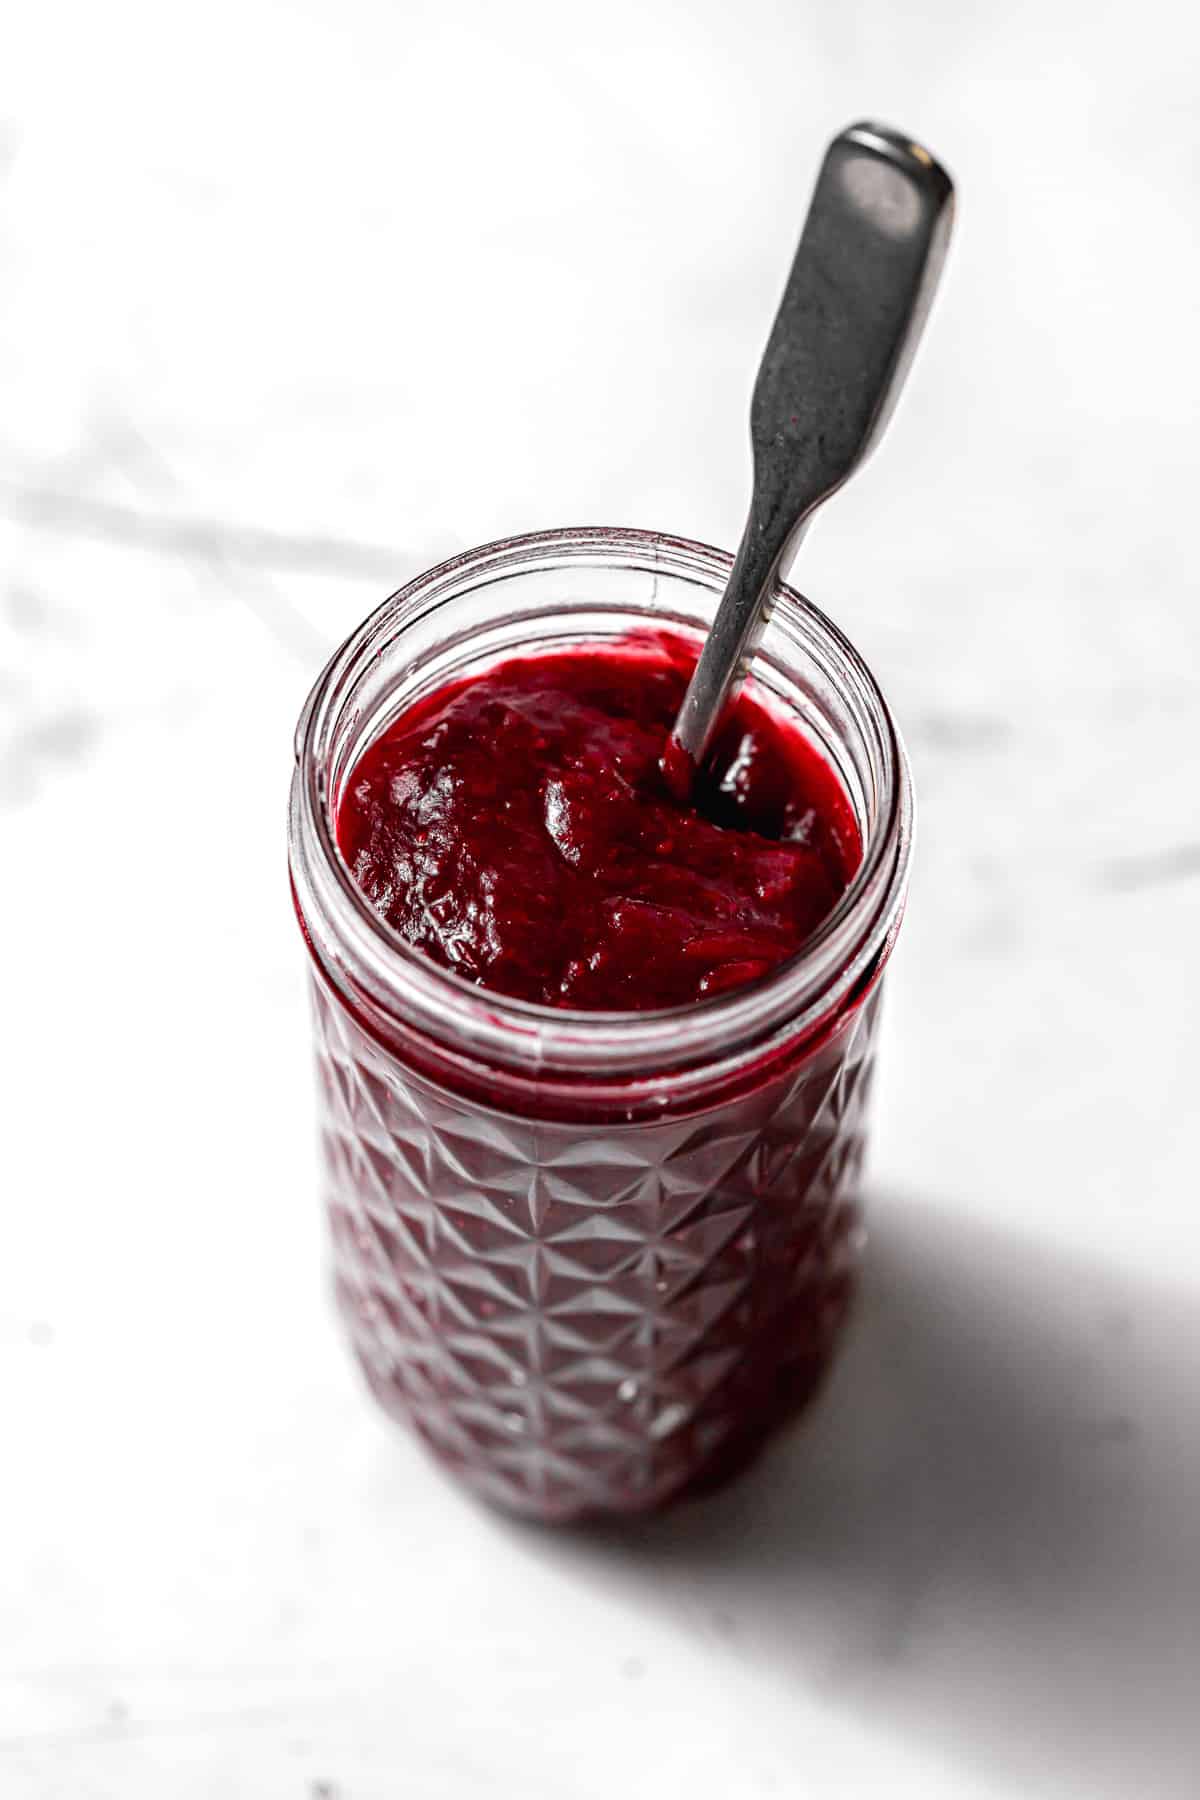 cinnamon orange cranberry jam in glass jar